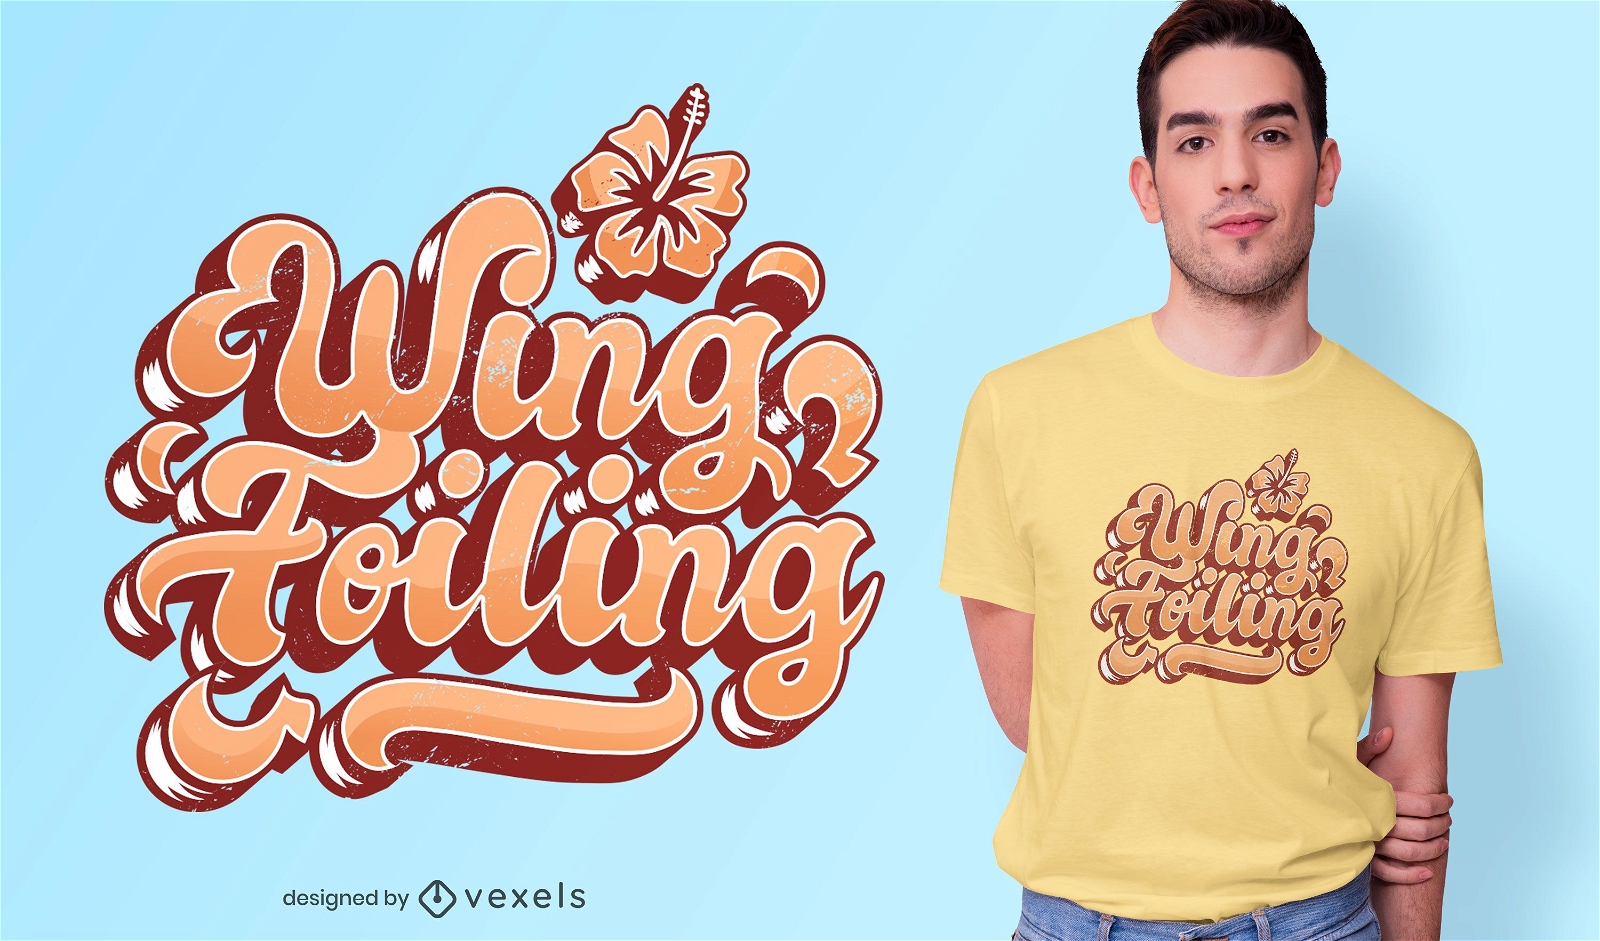 Wing foiling t-shirt design